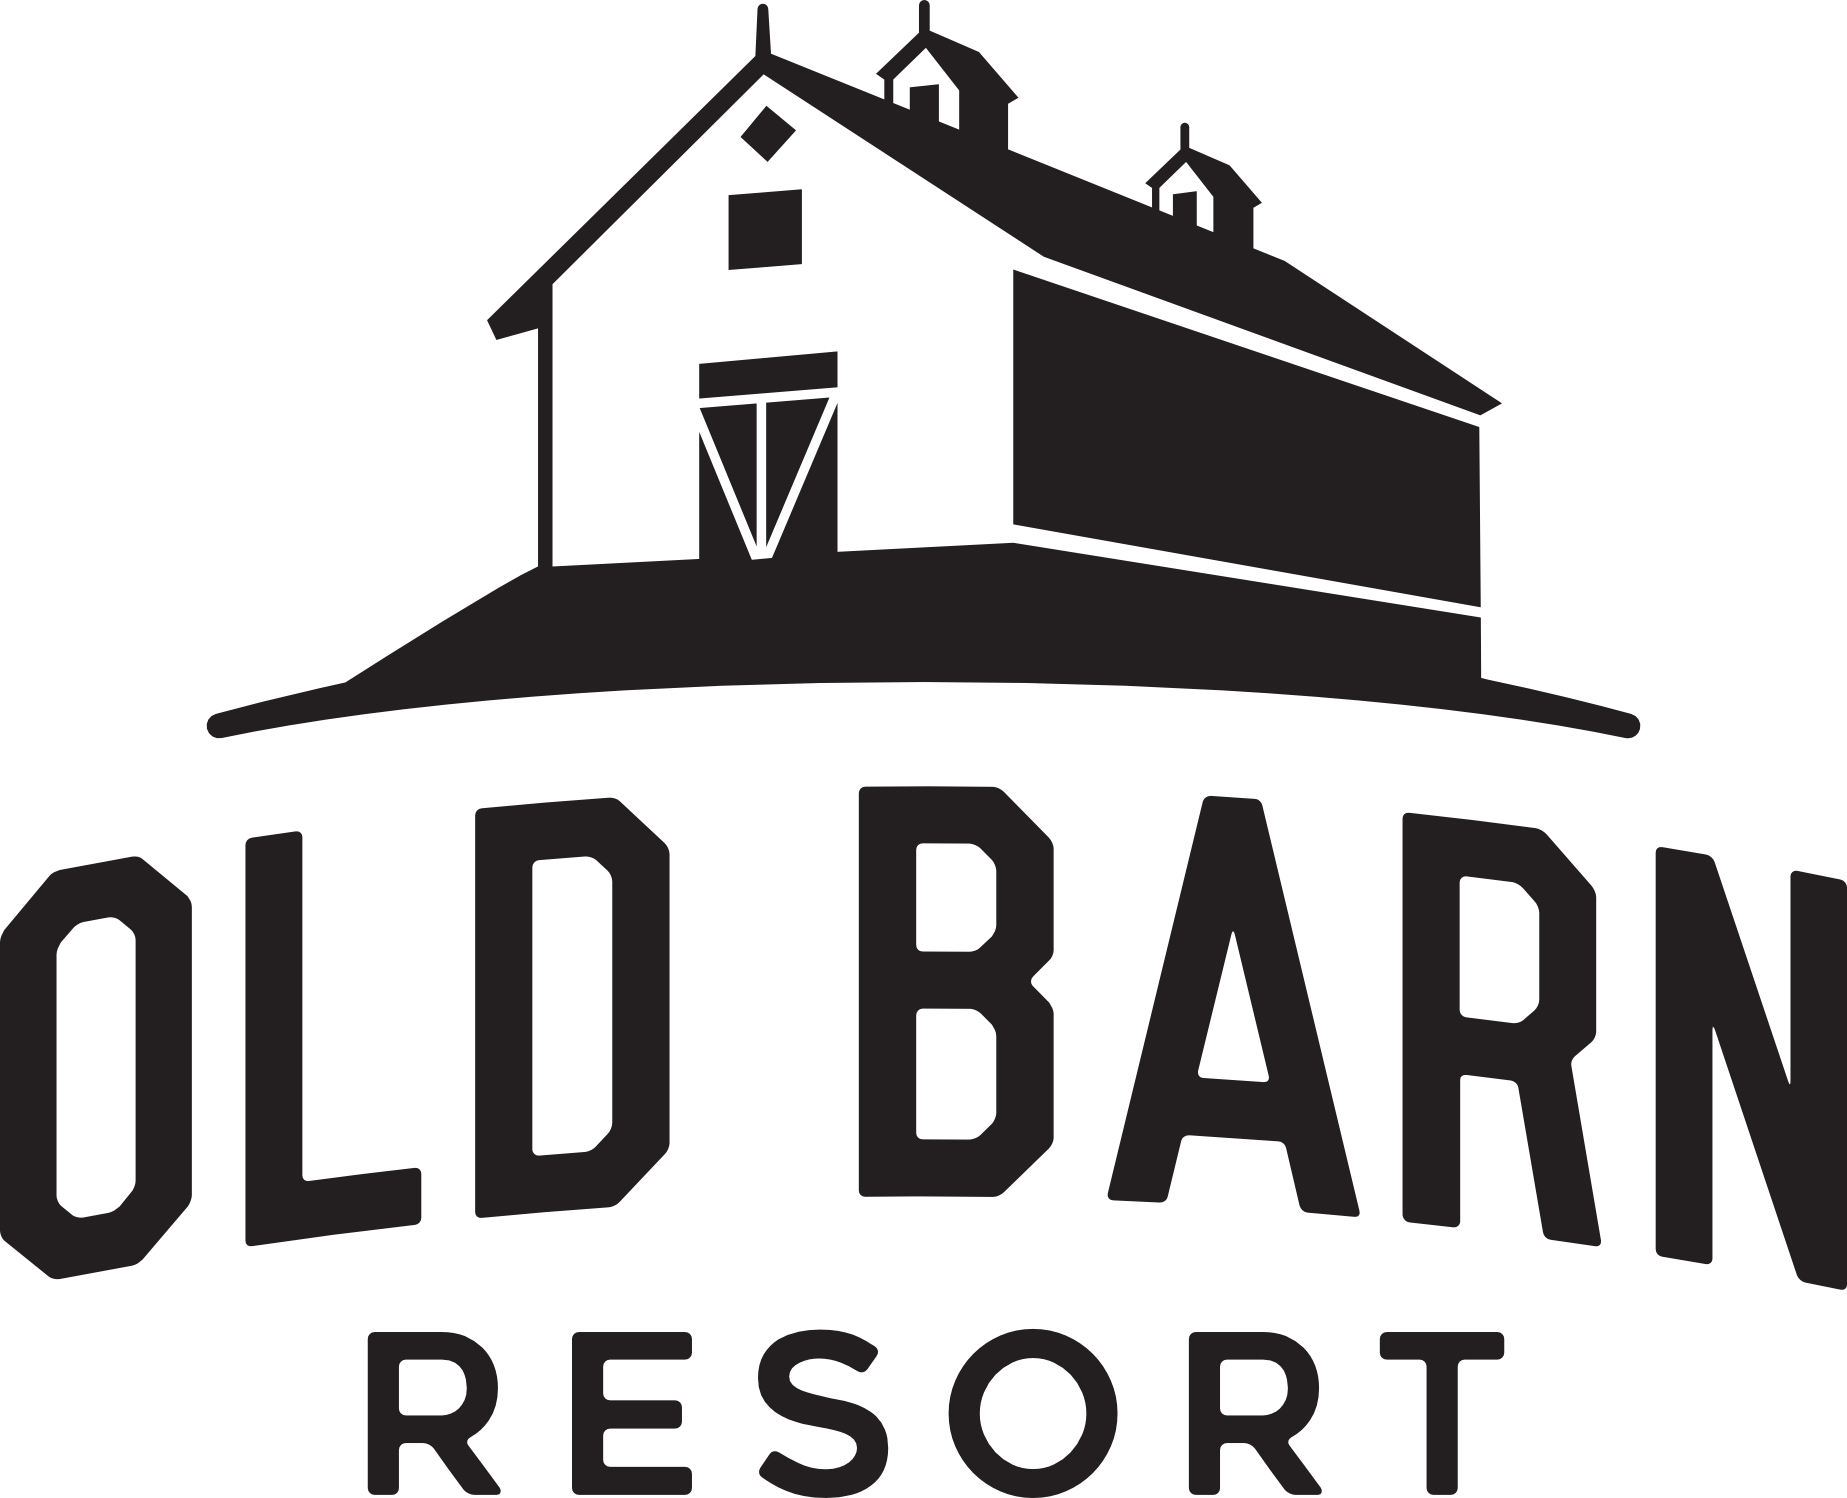 Old Barn Resort